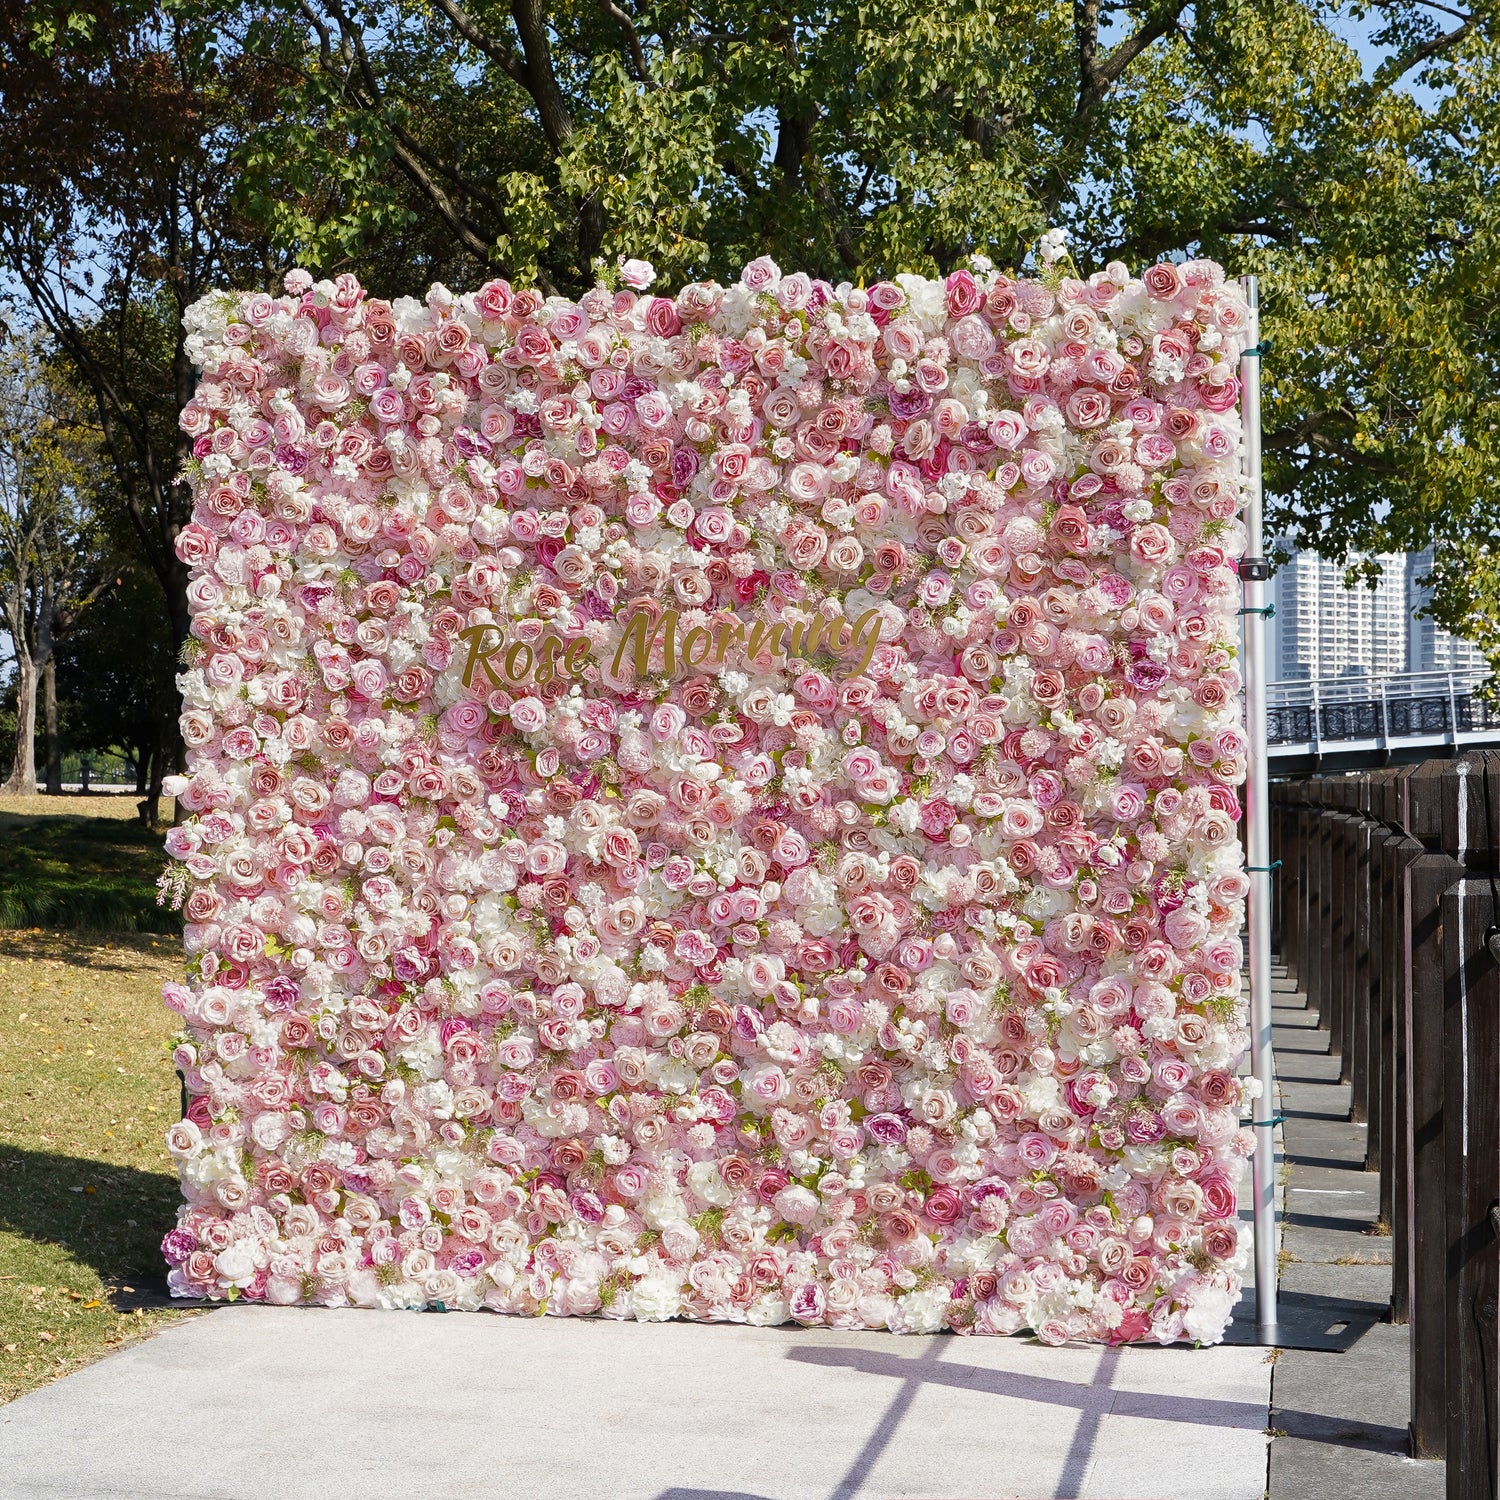 Flower Wall,Artificial Flower,Rolling Up Curtain Flower Wall,Aapo: 3D Fabric Artificial Flower Wall Rolling Up Curtain Flower Wall R110 - 8ft*8ft,Rose Morning